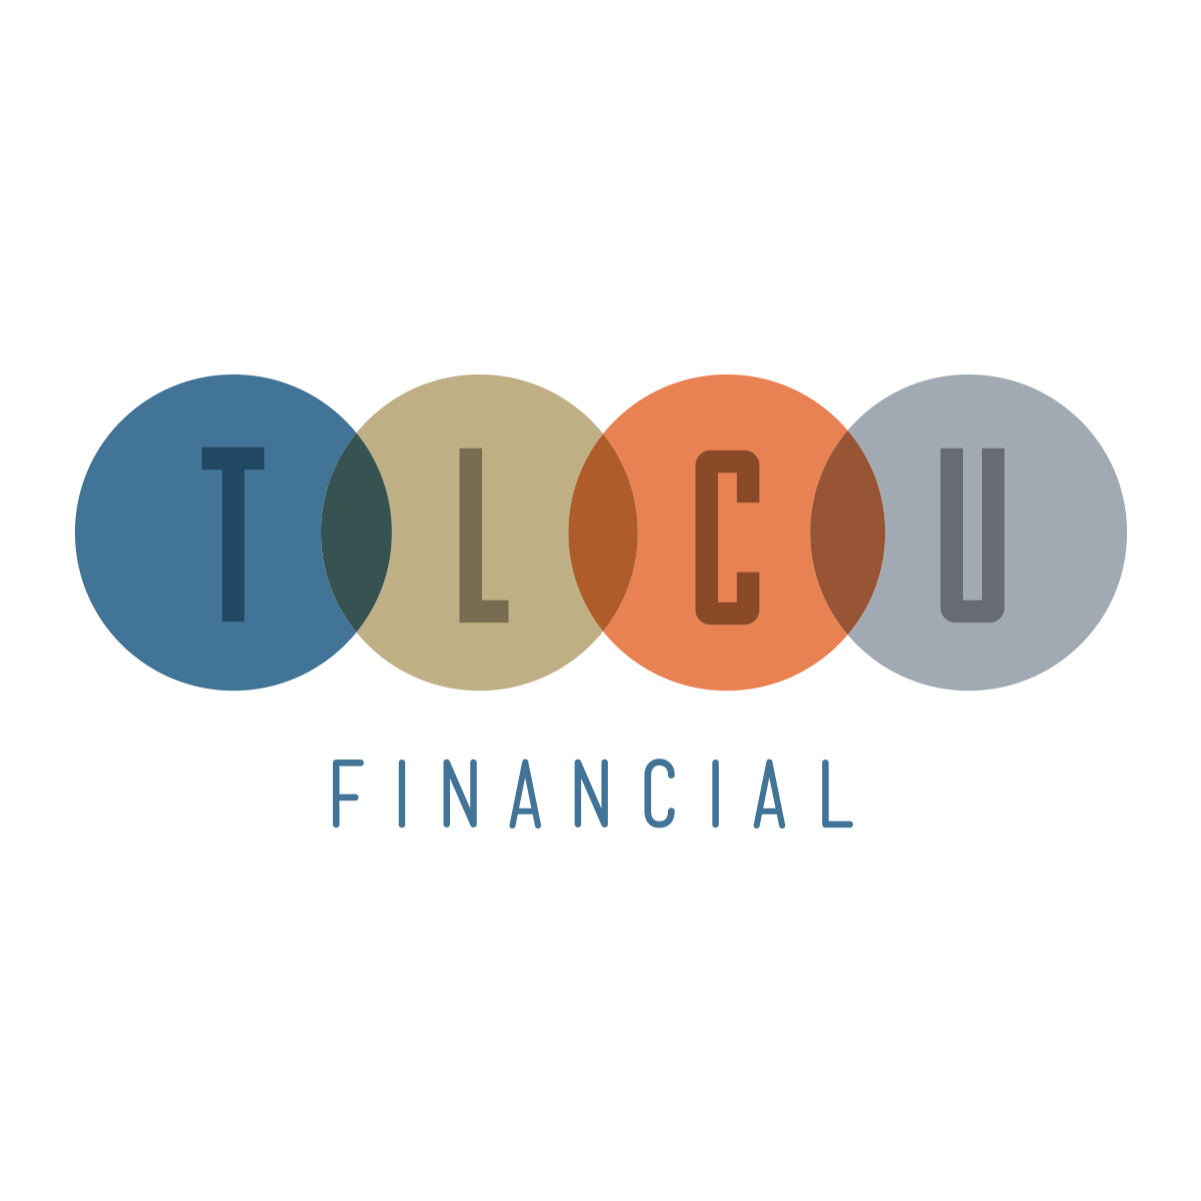 TLCU Financial Logo